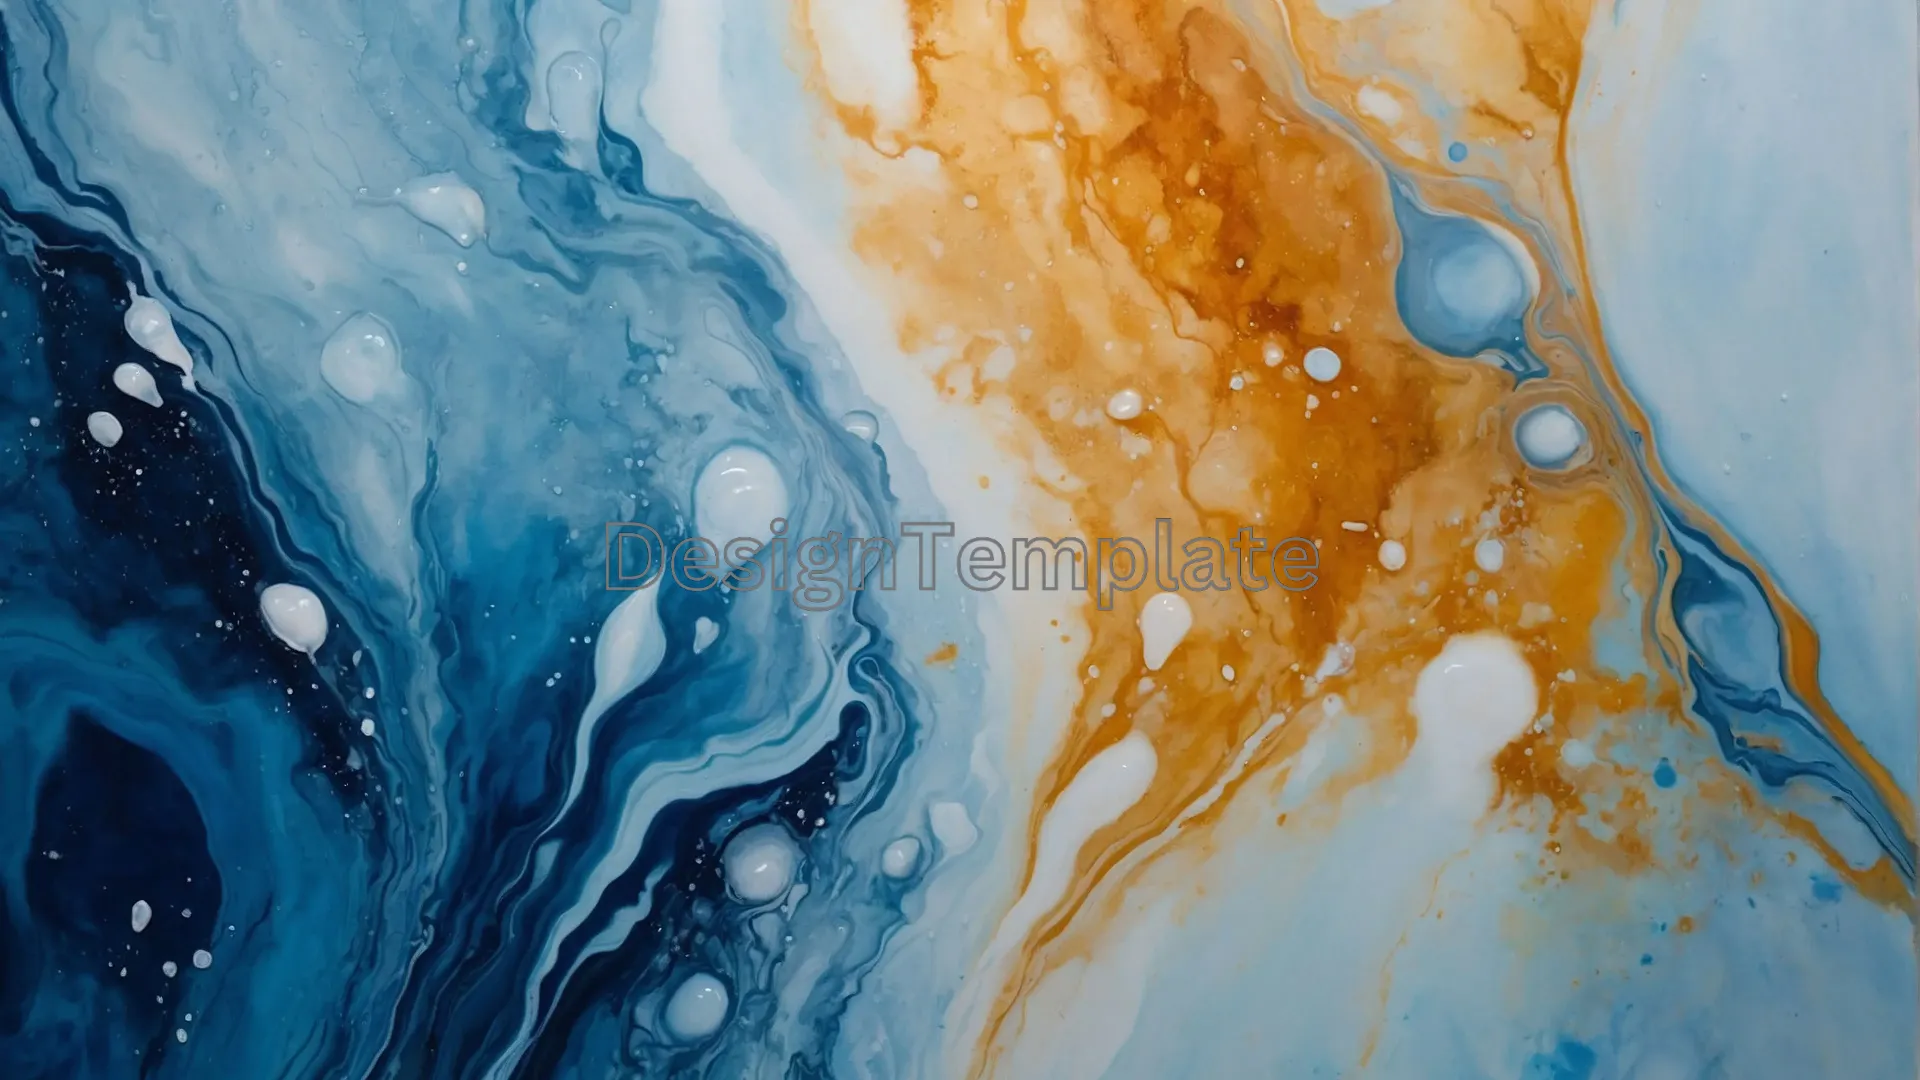 Artistic Blue Orange Marble Background